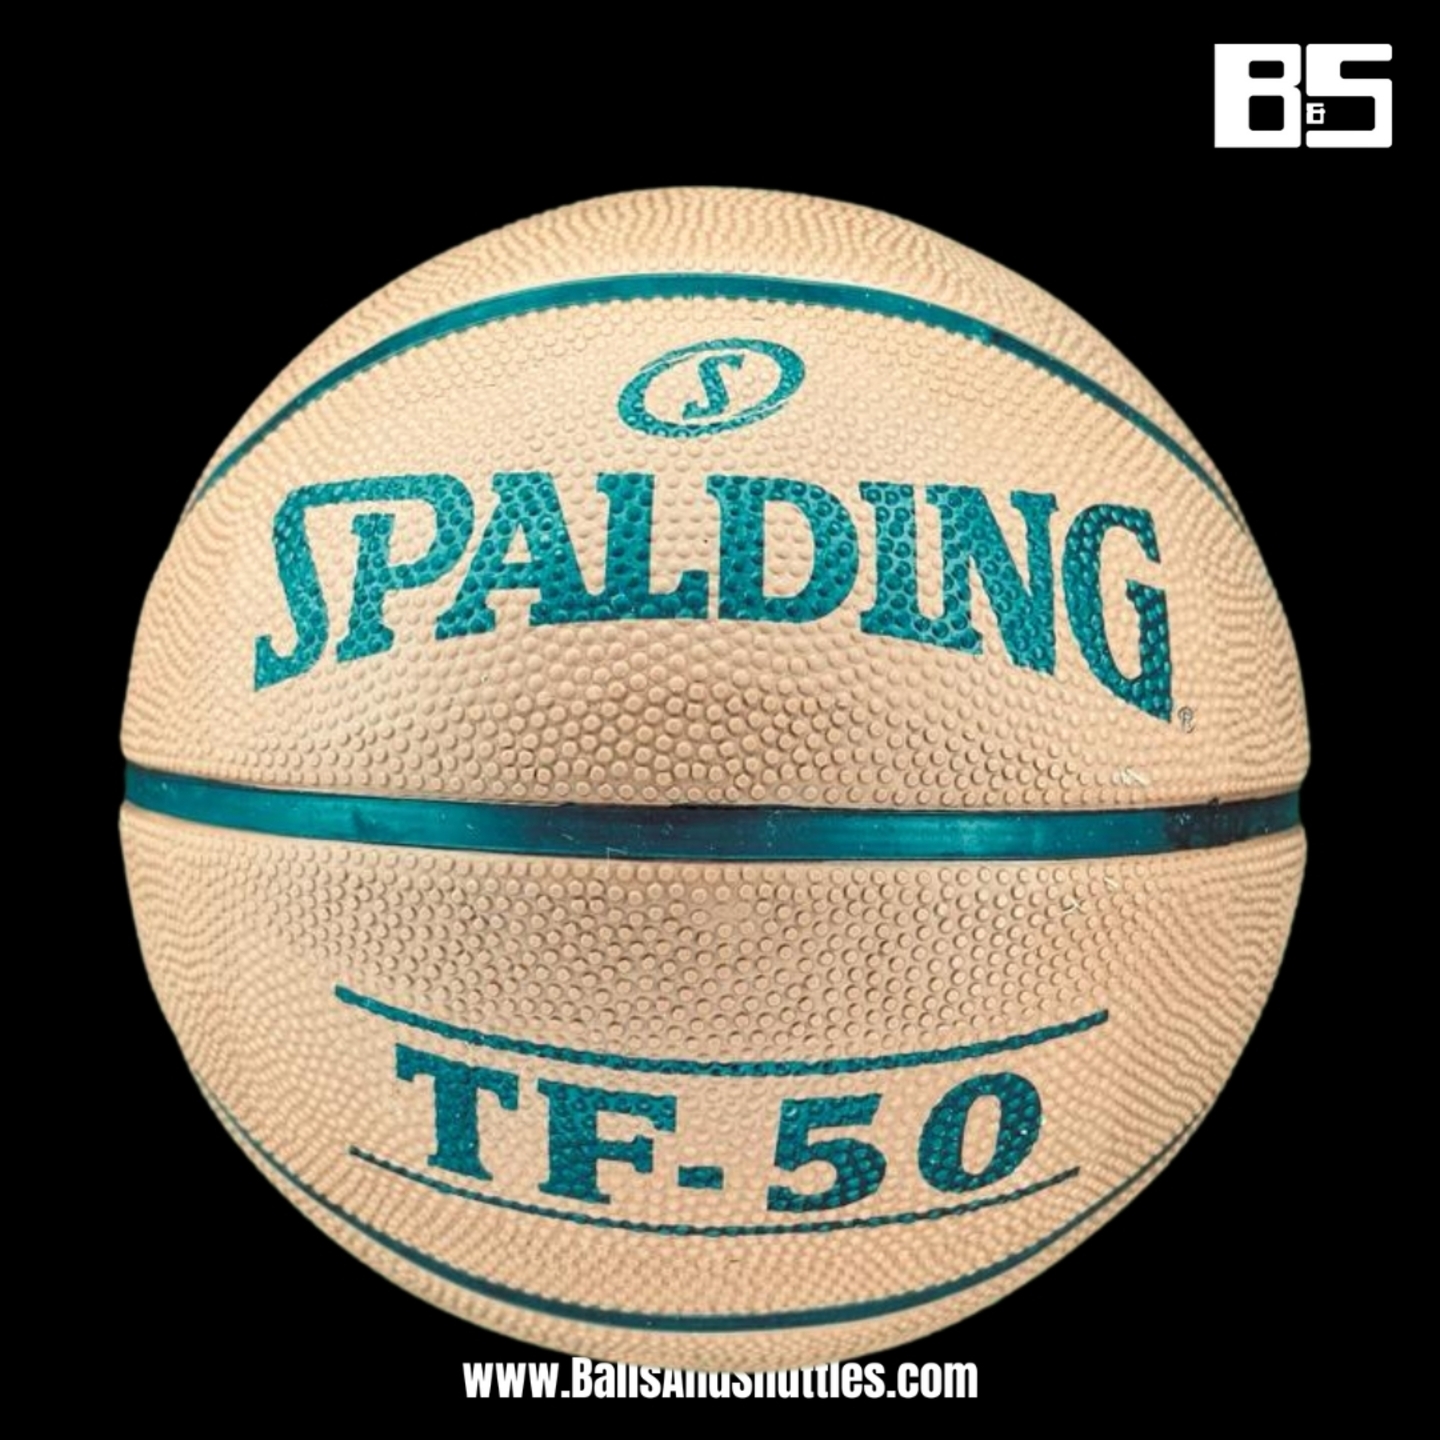 SPALDING NBA TF-50 BASKETBALL | SPALDING SIZE 6 BASKETBALL | SPALDING BASKETBALL